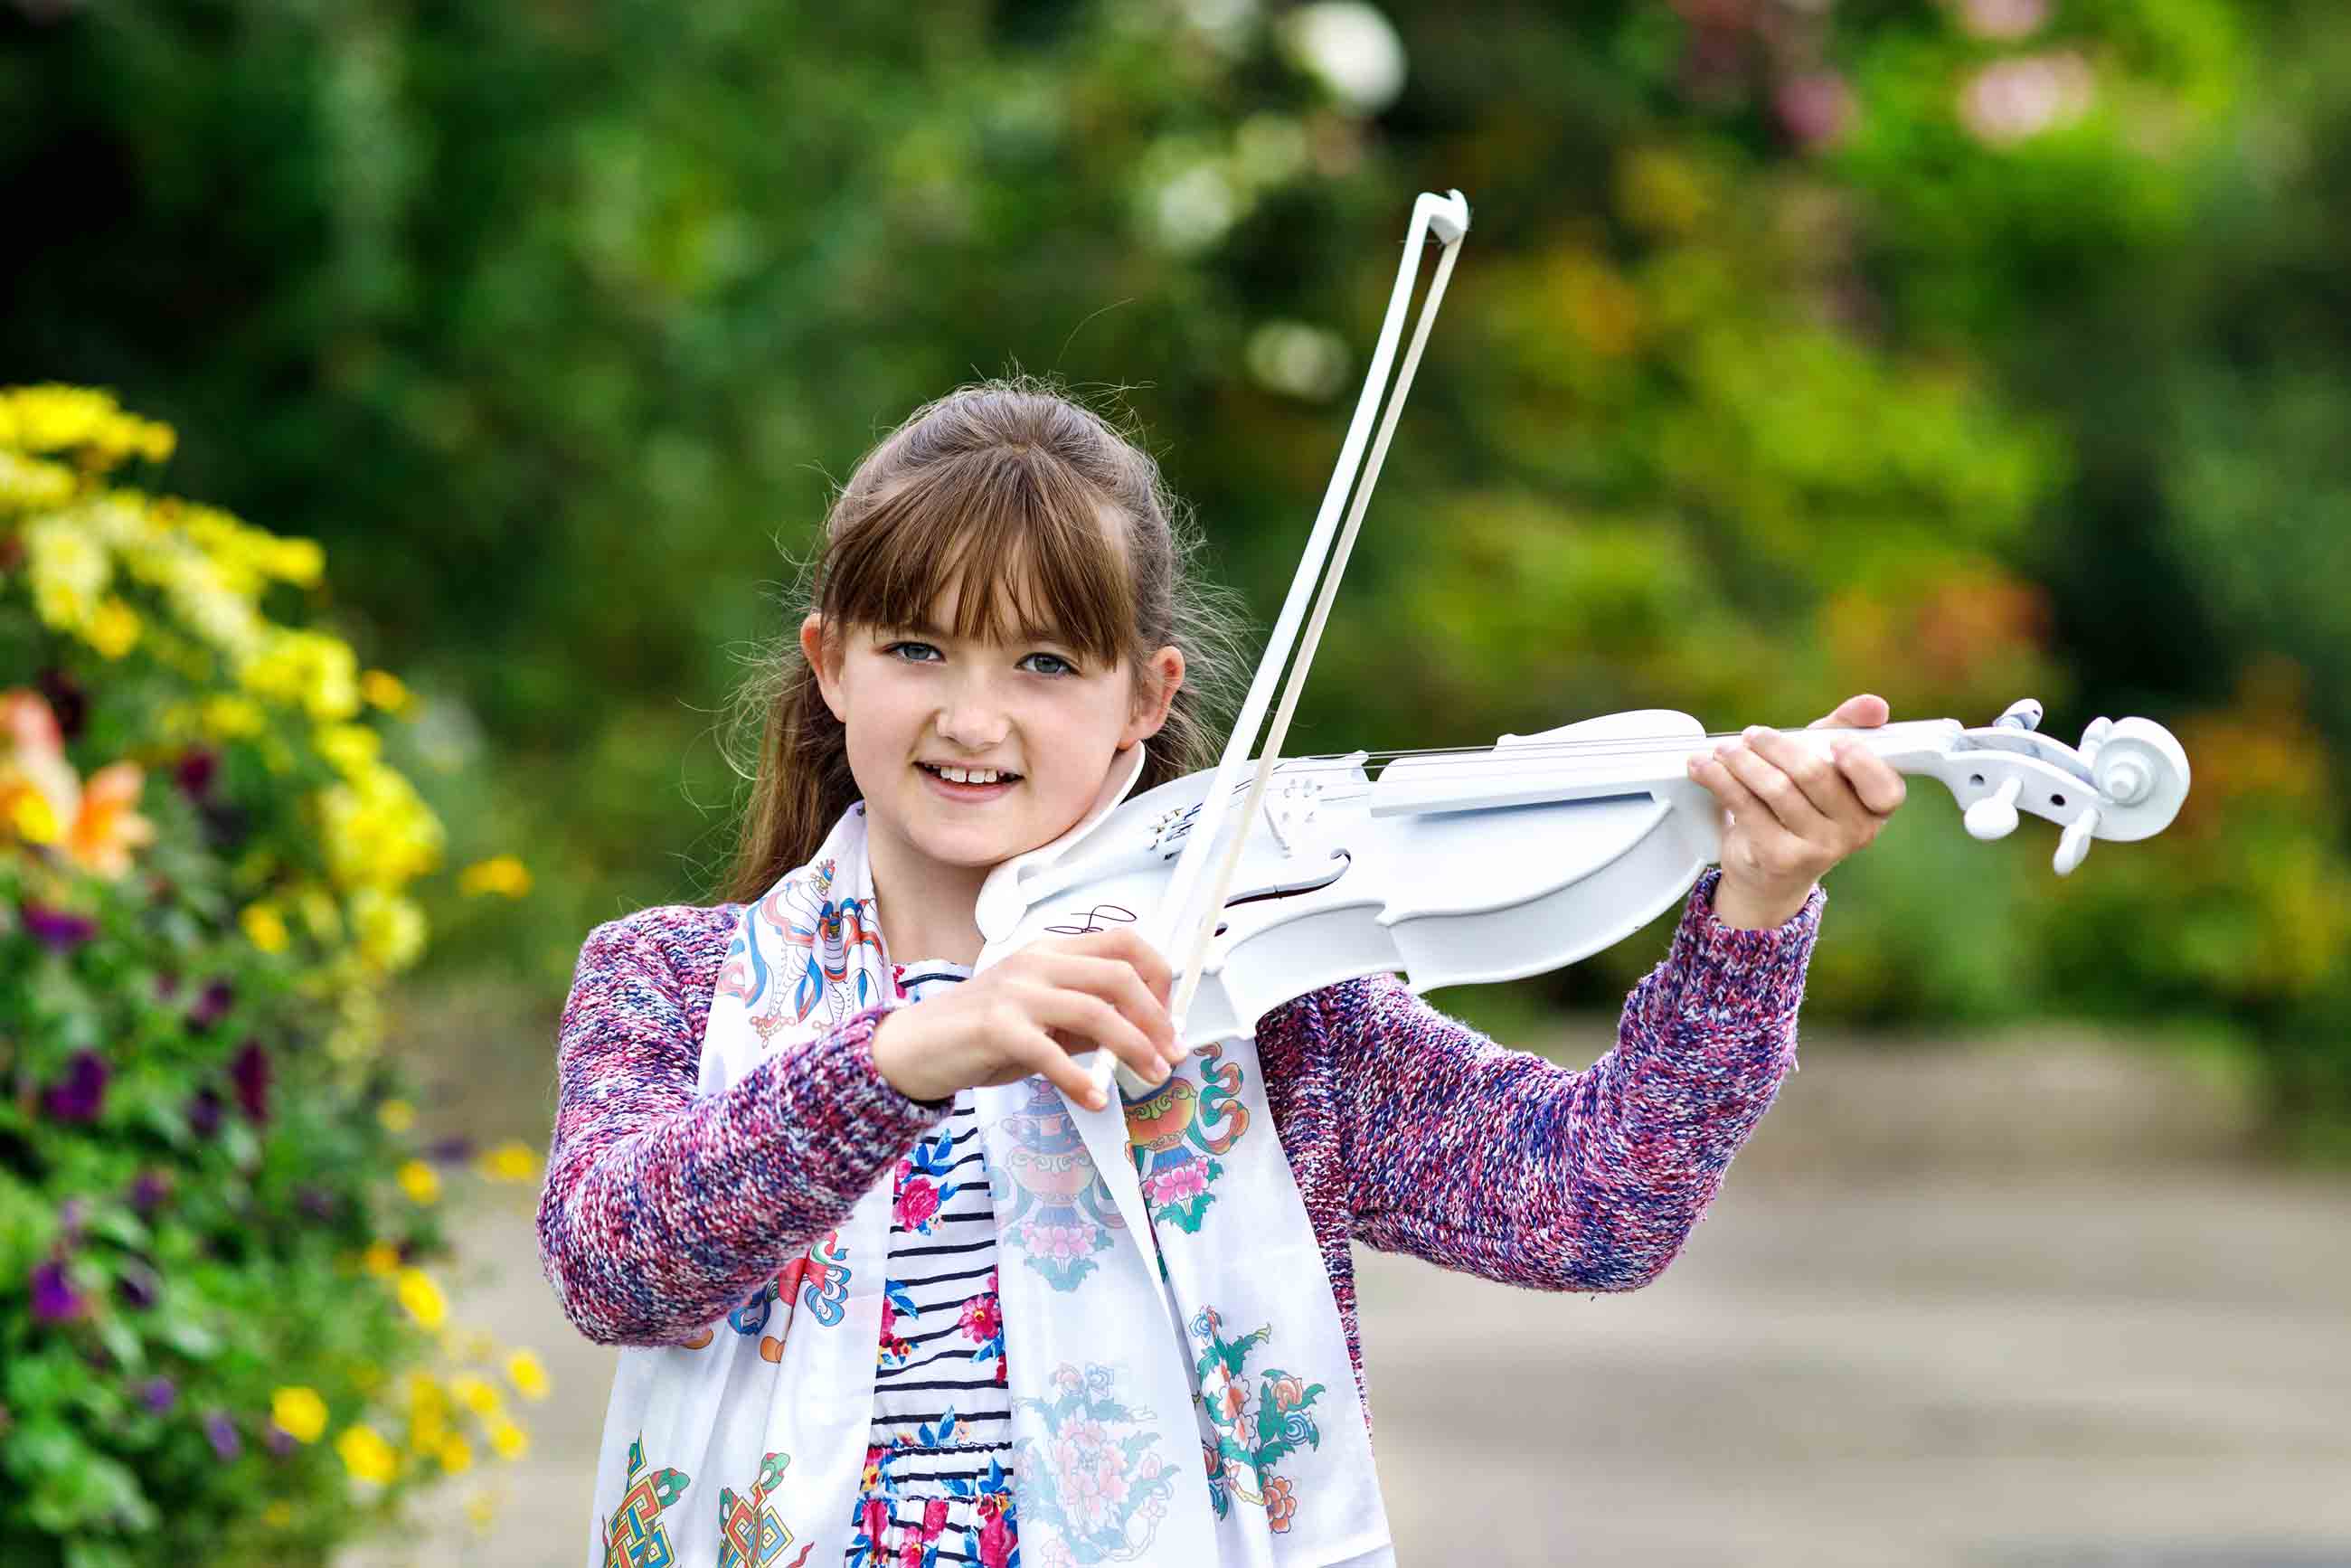 Local schoolgirl Jessica Hepworth playing Sam Smith’s violin